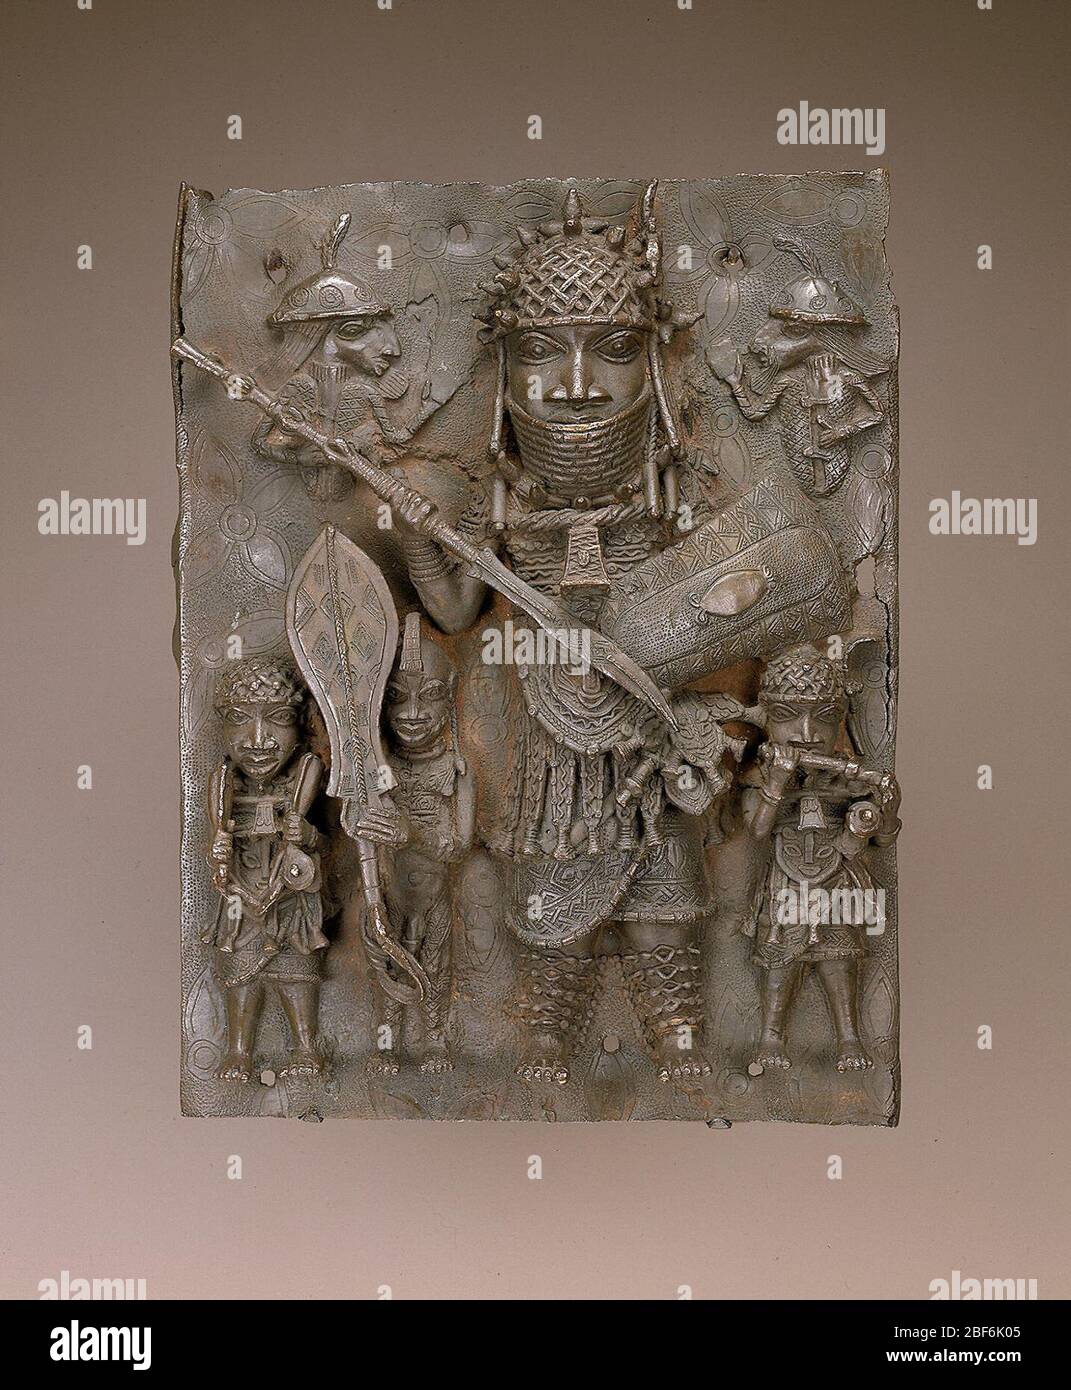 Stile tribunale del Regno di Benin; Nigeria; metà del XVI e XVII secolo; lega di rame; a x L x P: 45.6 x 35 x 8.9 cm (17 15/16 x 13 3/4 x 3 1/2 in.) Foto Stock